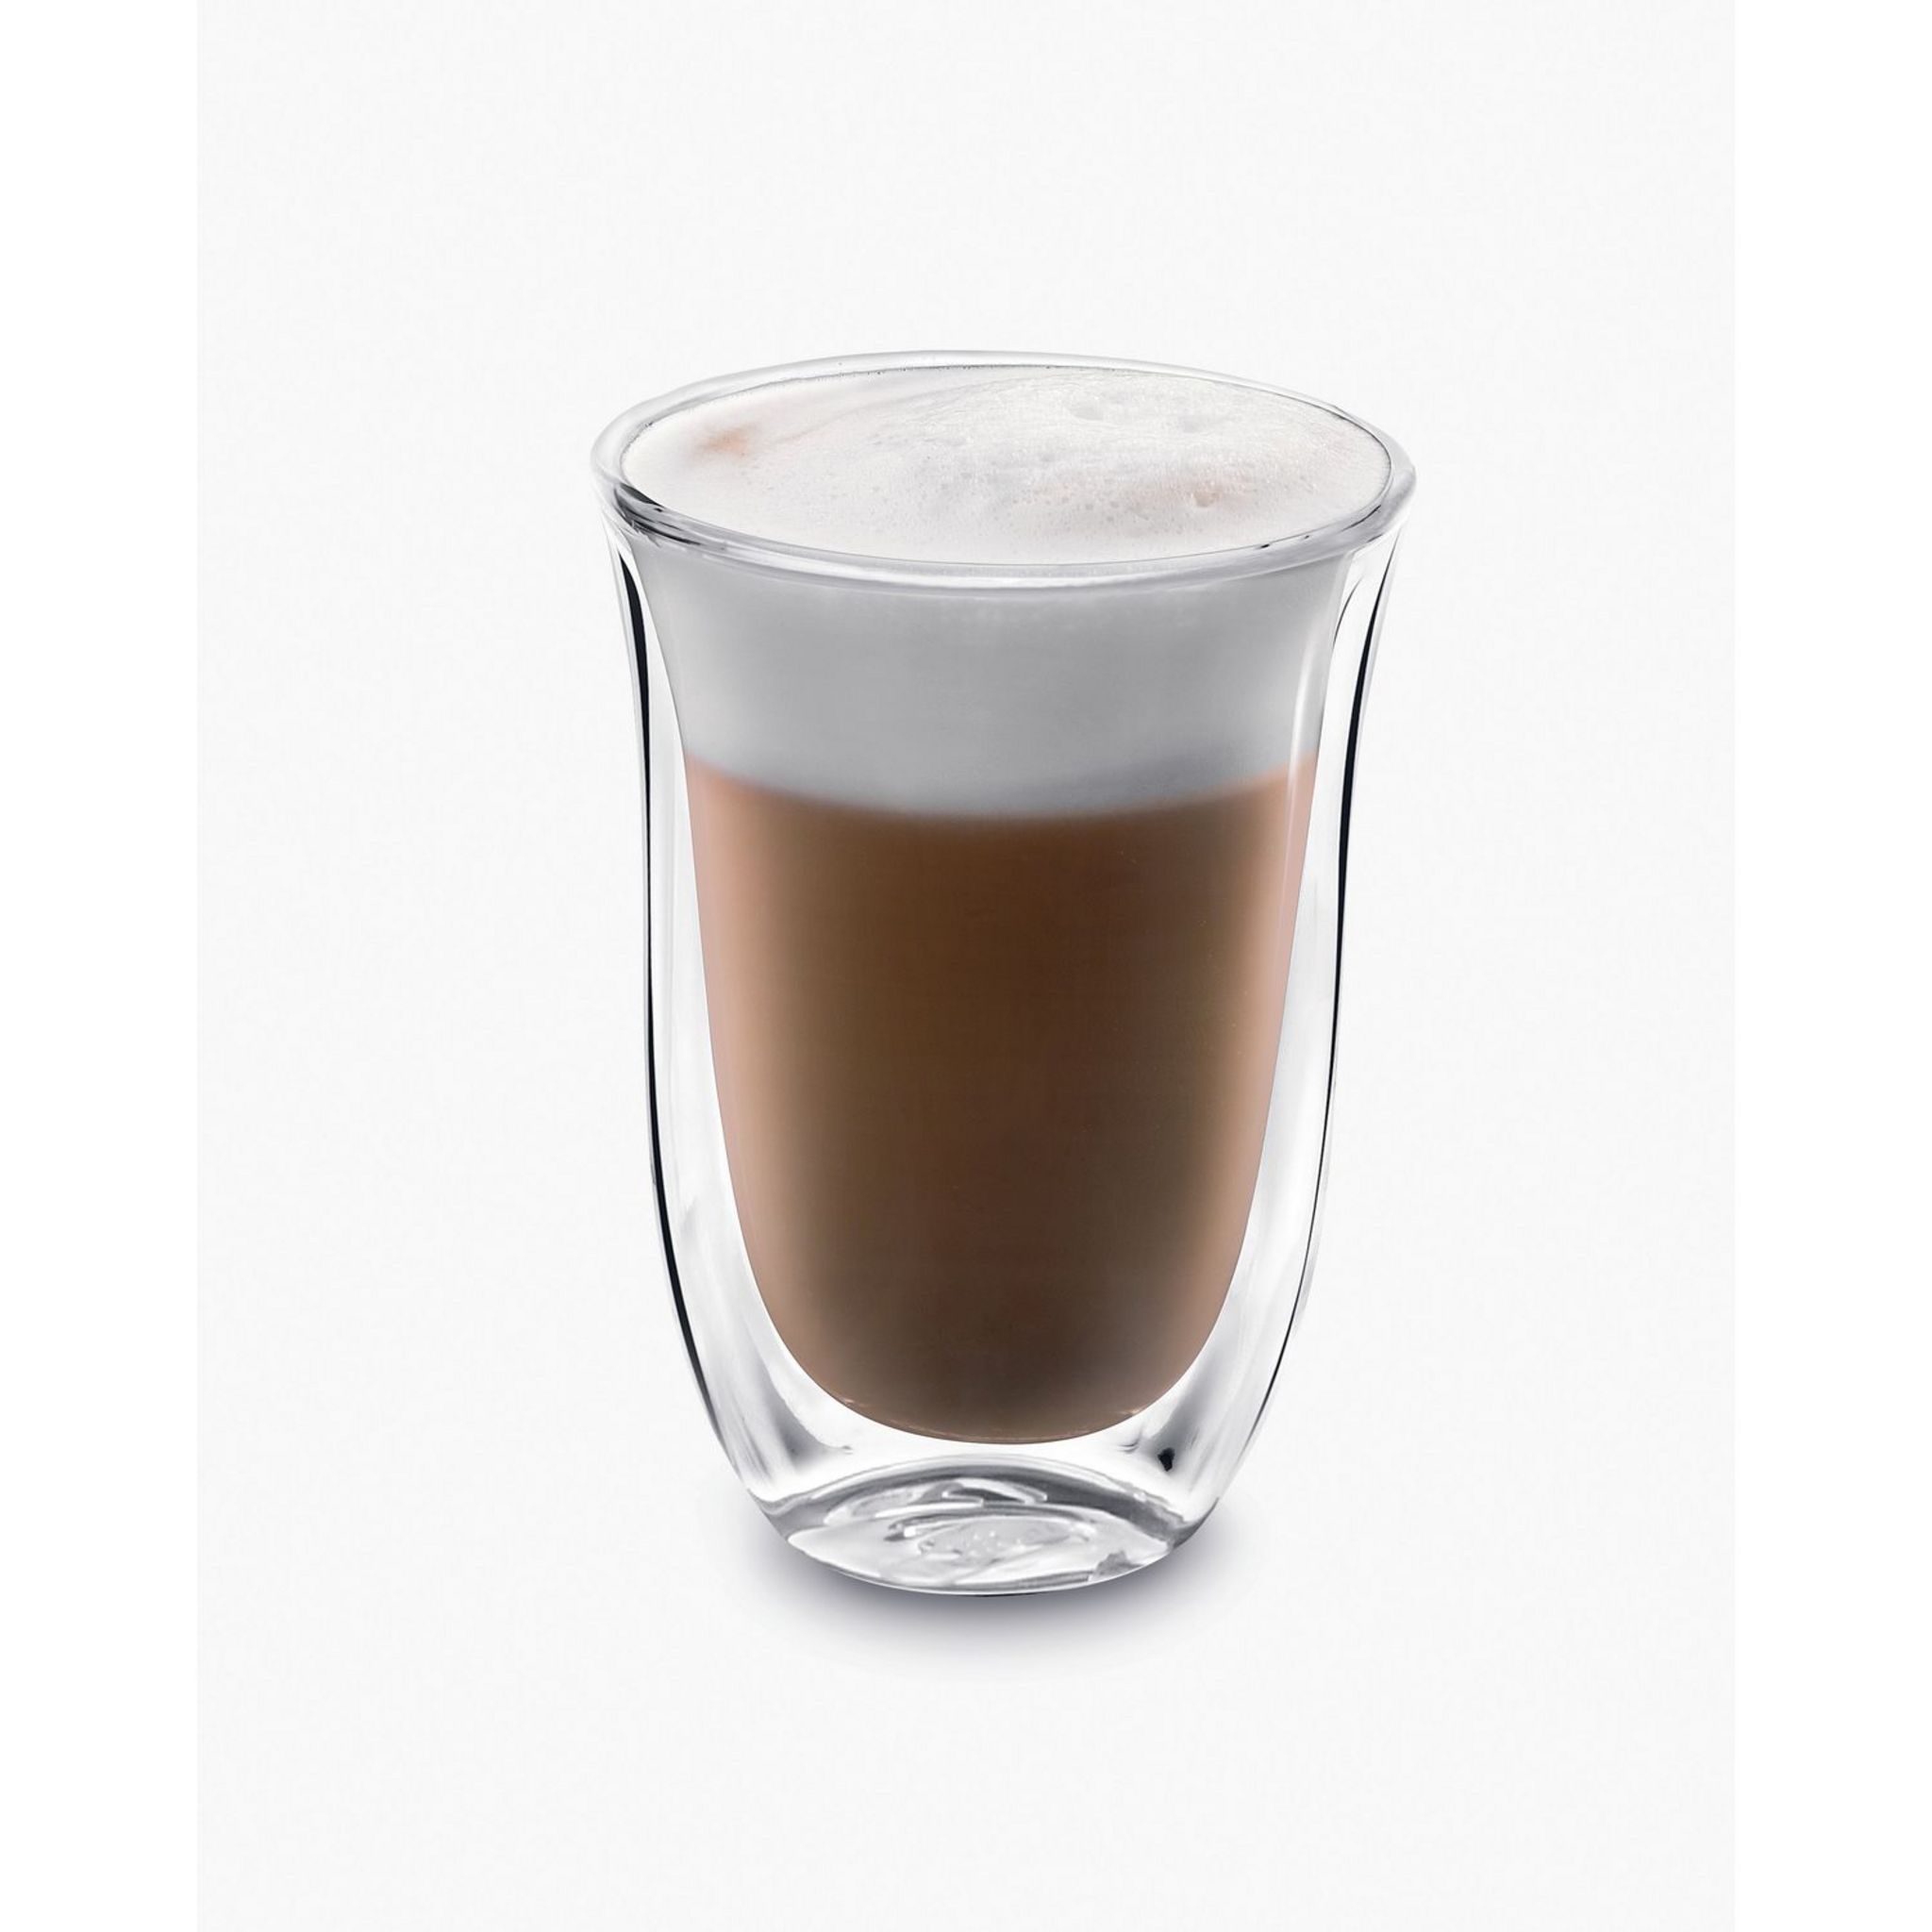 Delonghi 2 tasses Latte Macchiato DLSC312 verres à double fond